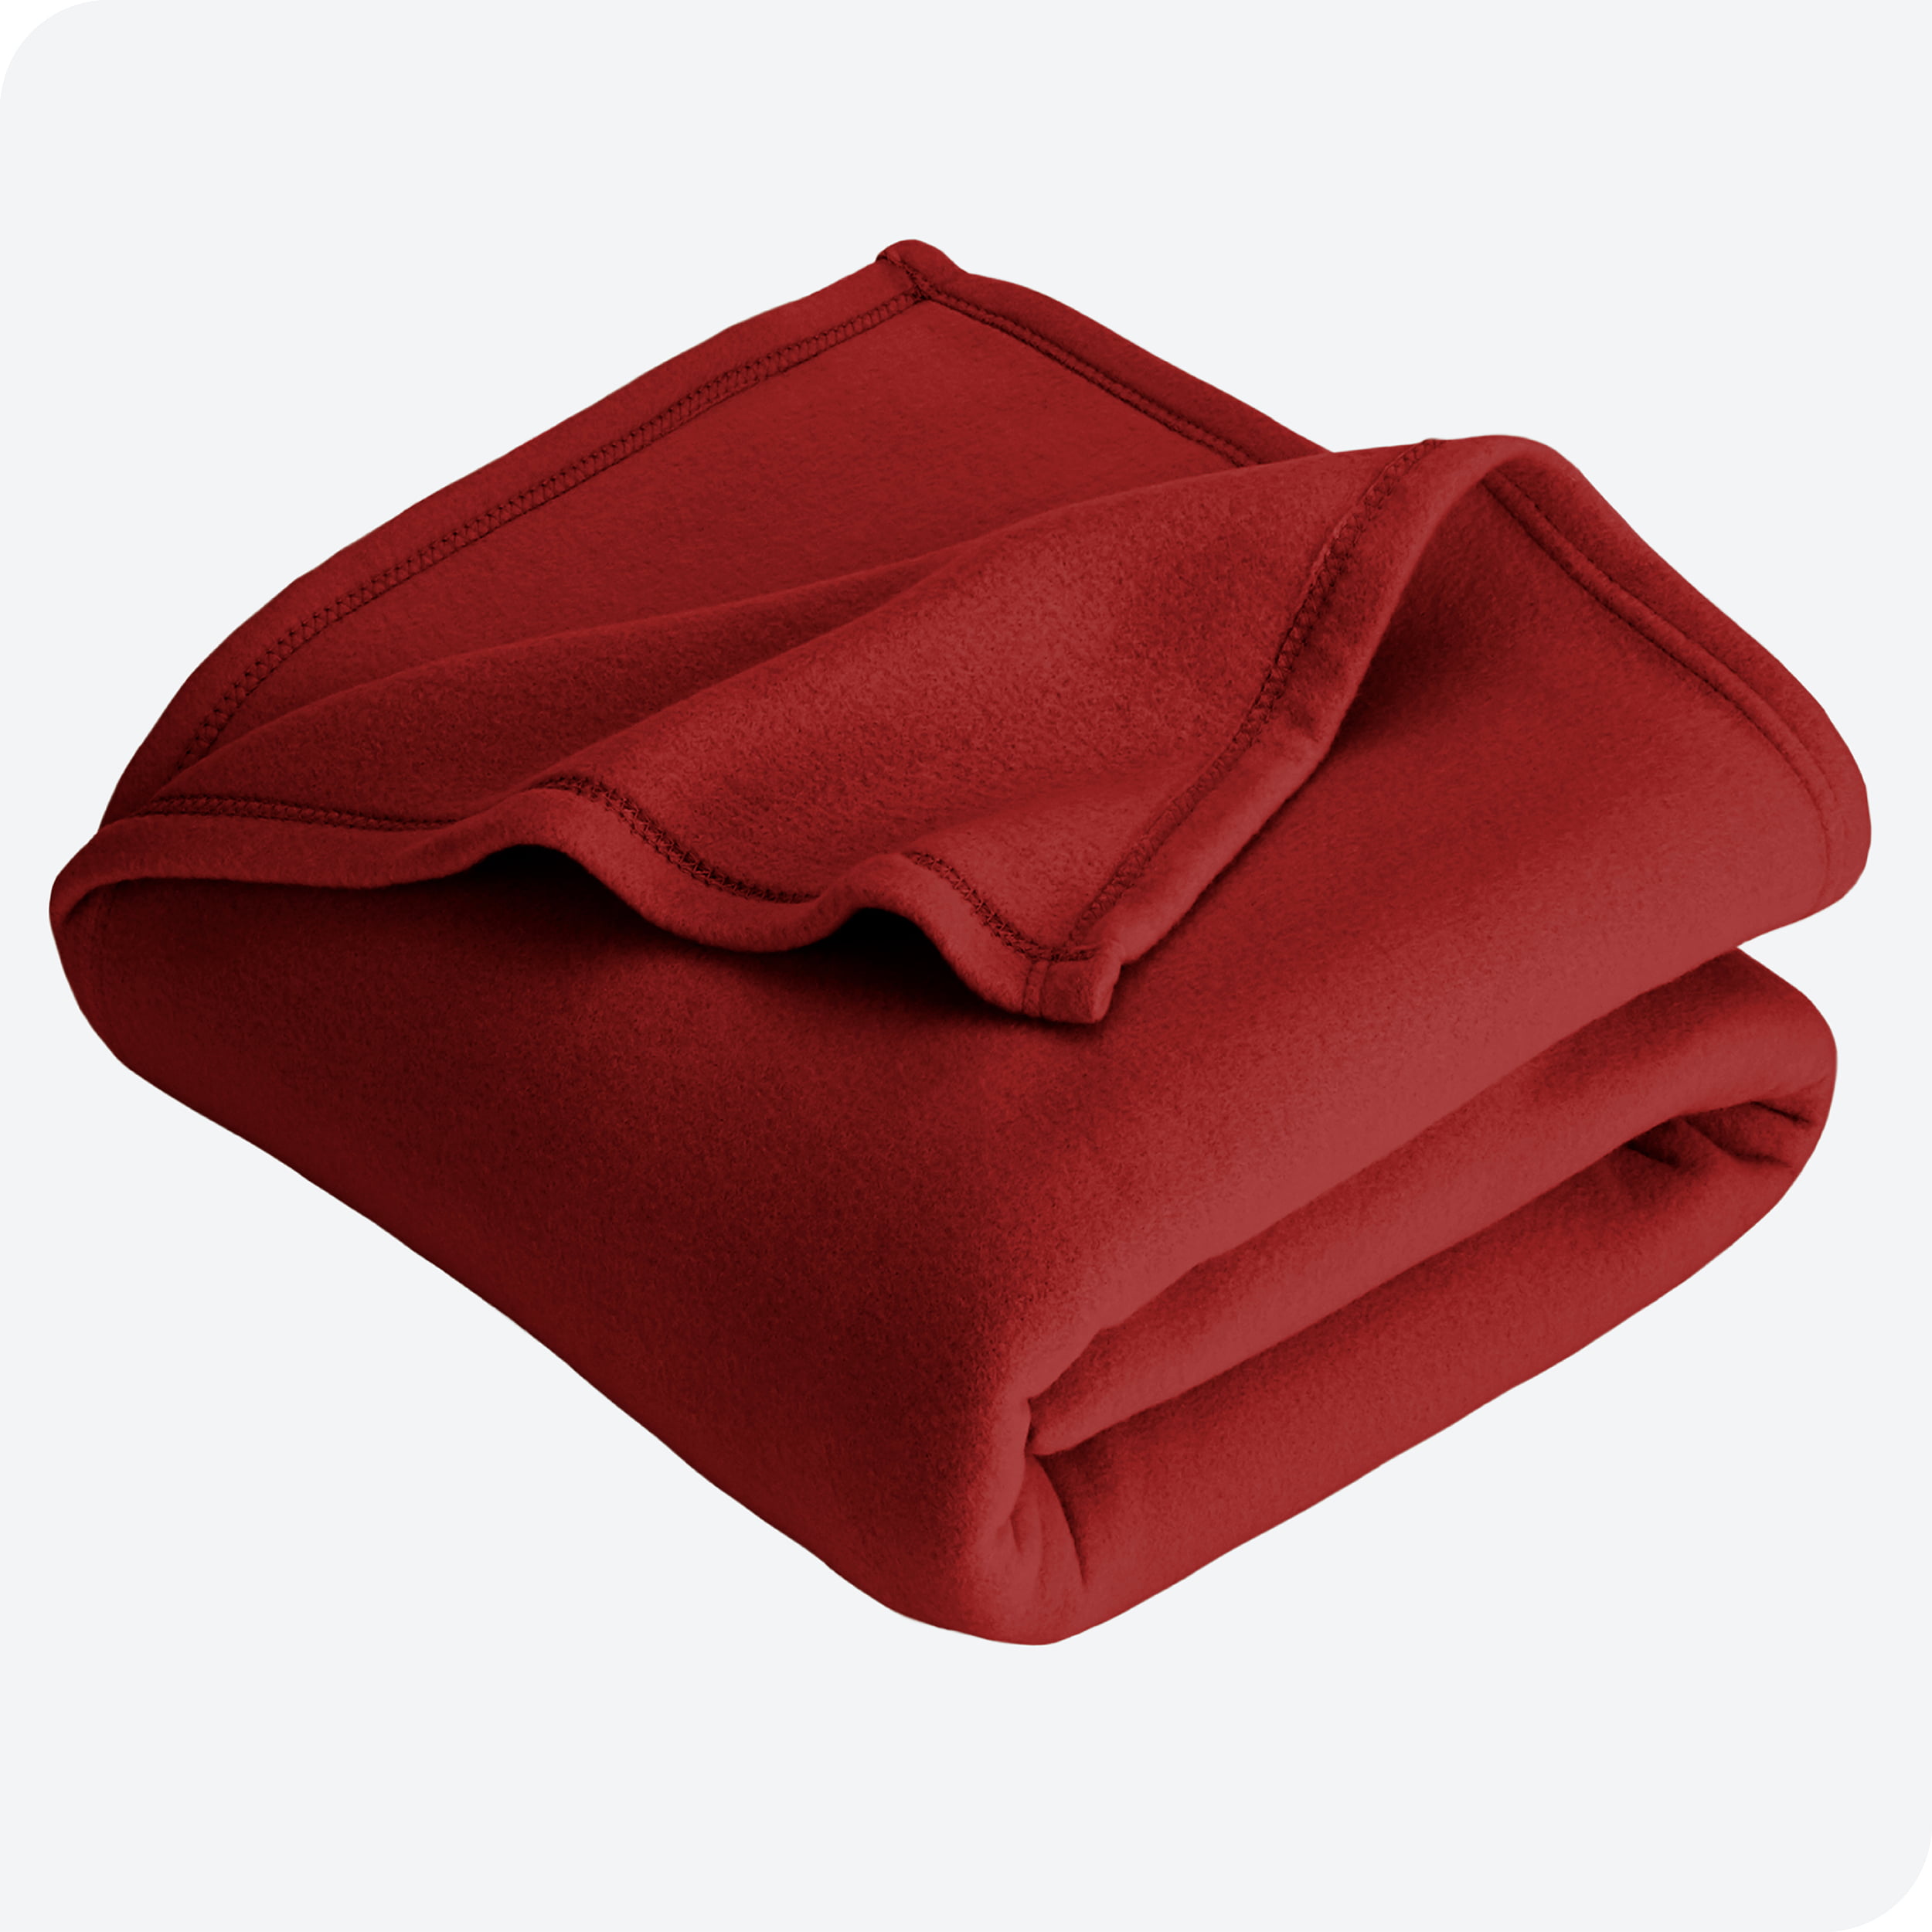 Metallic Cube Art Warm Fleece Throw Blanket 150x200 Soft Throw 9 Colors Hot Sale 